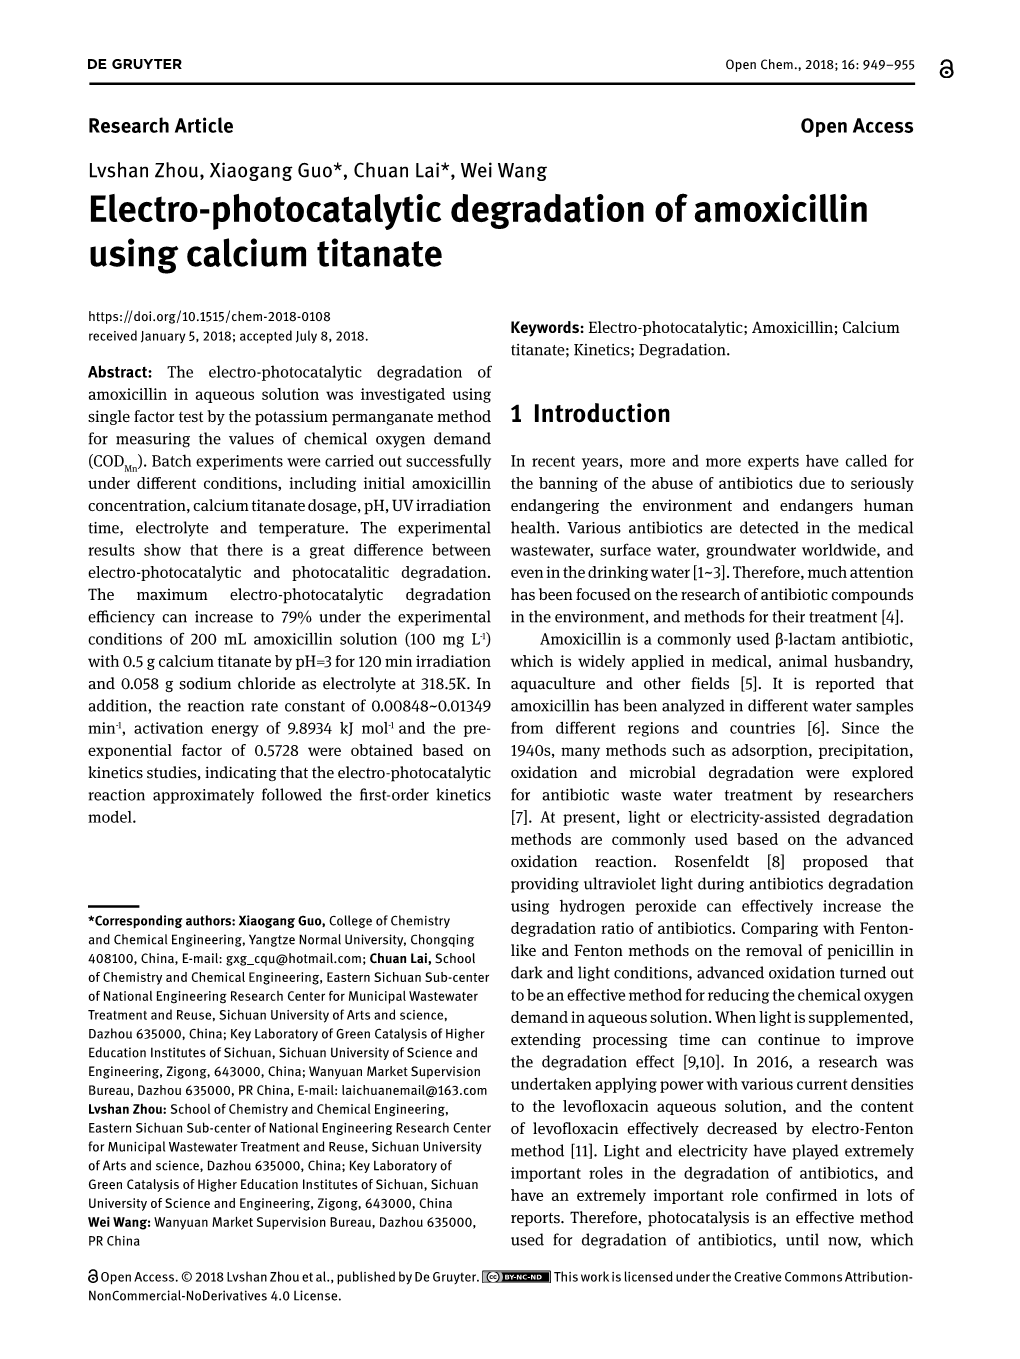 Electro-Photocatalytic Degradation of Amoxicillin Using Calcium Titanate